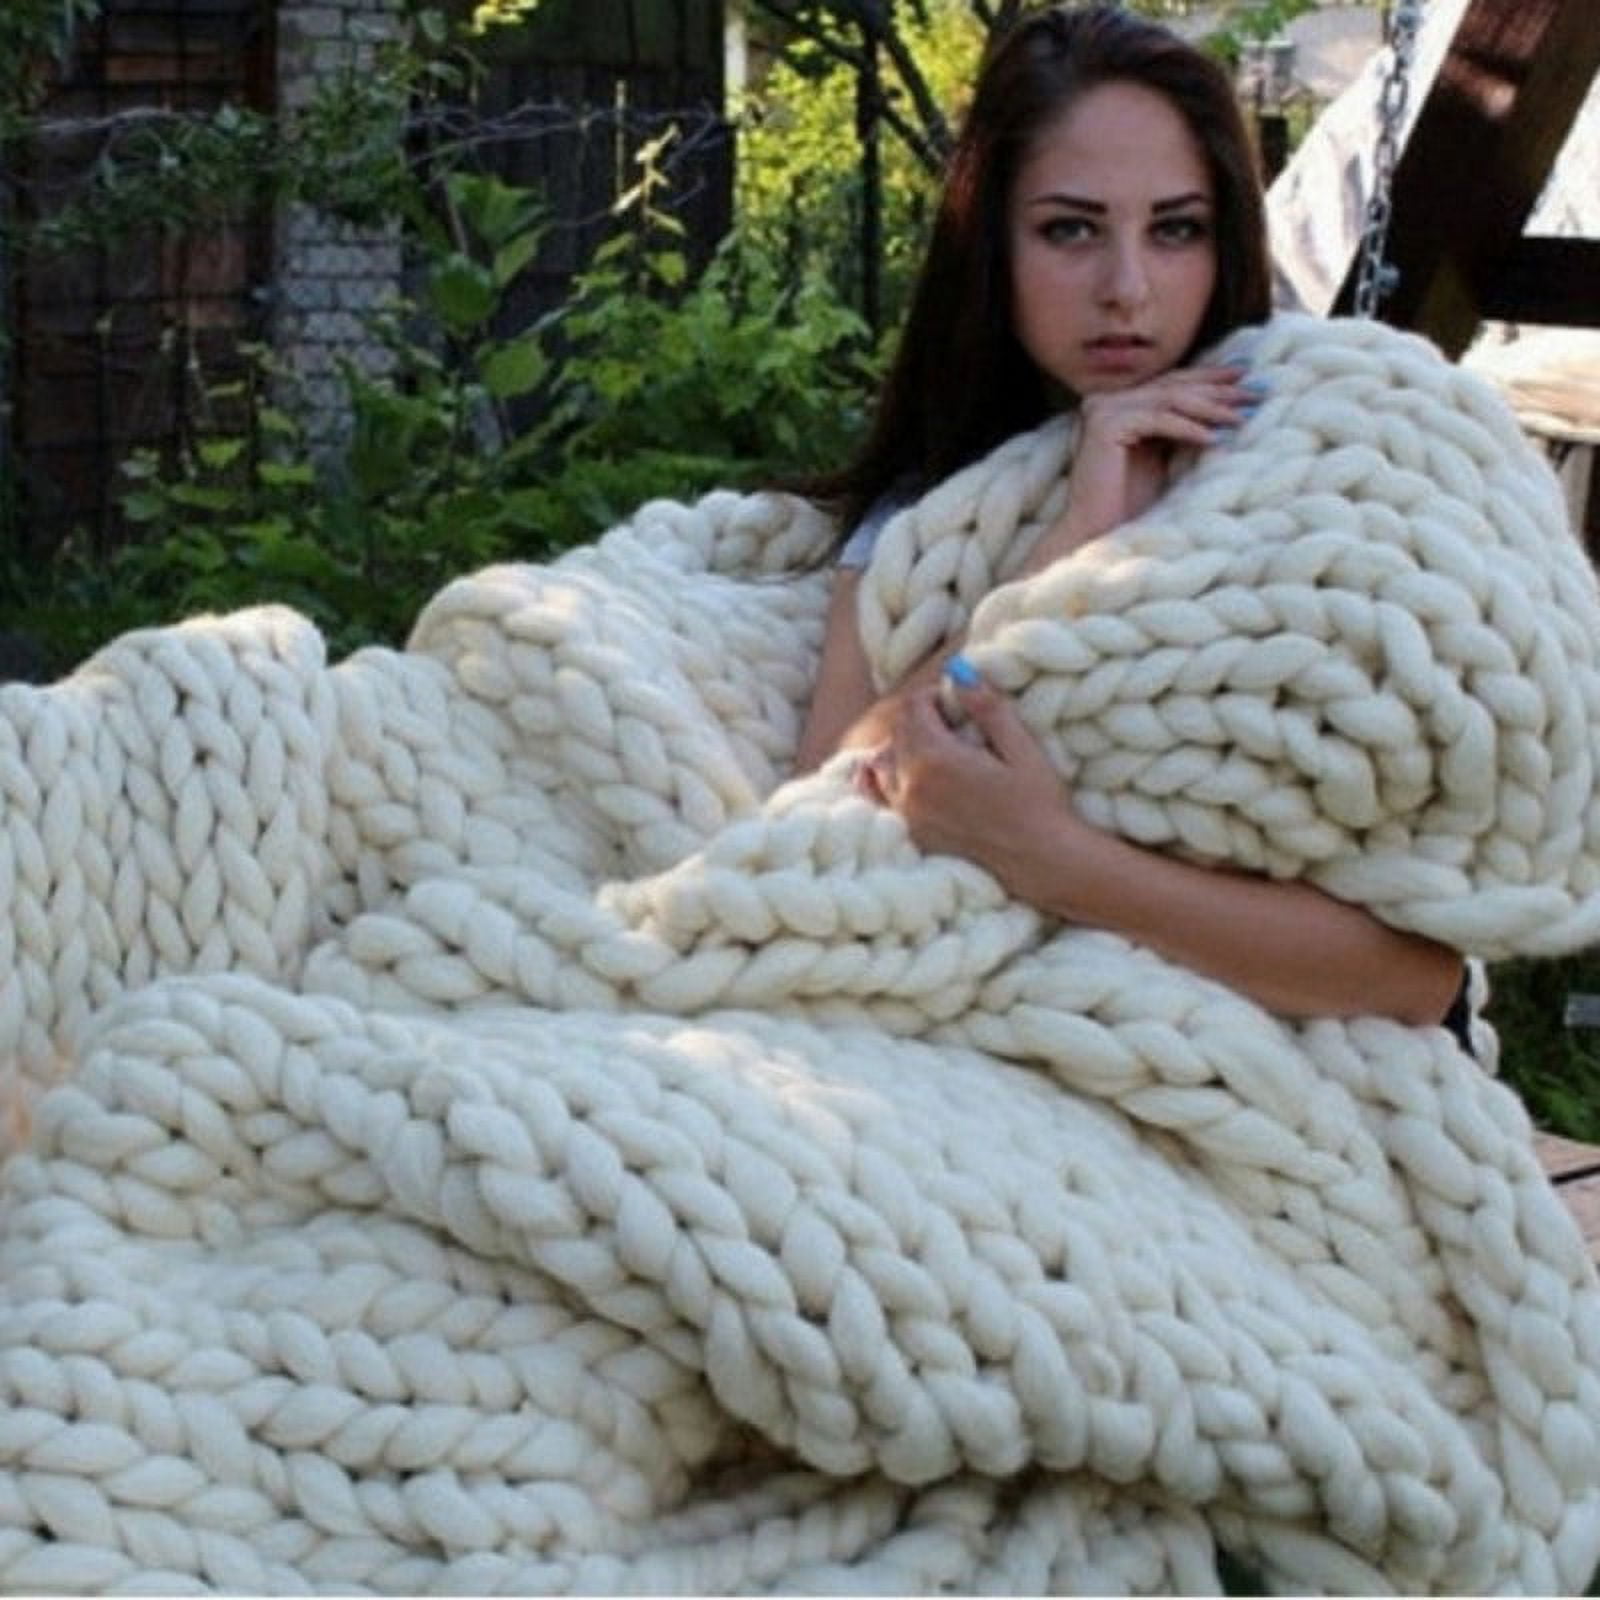  Super Chunky Vegan Yarn, Acrylic Bulky Thick Roving Washable  Softee Chunky Yarn for Arm Knitting DIY Handmade Blankets (Grey, 20m)